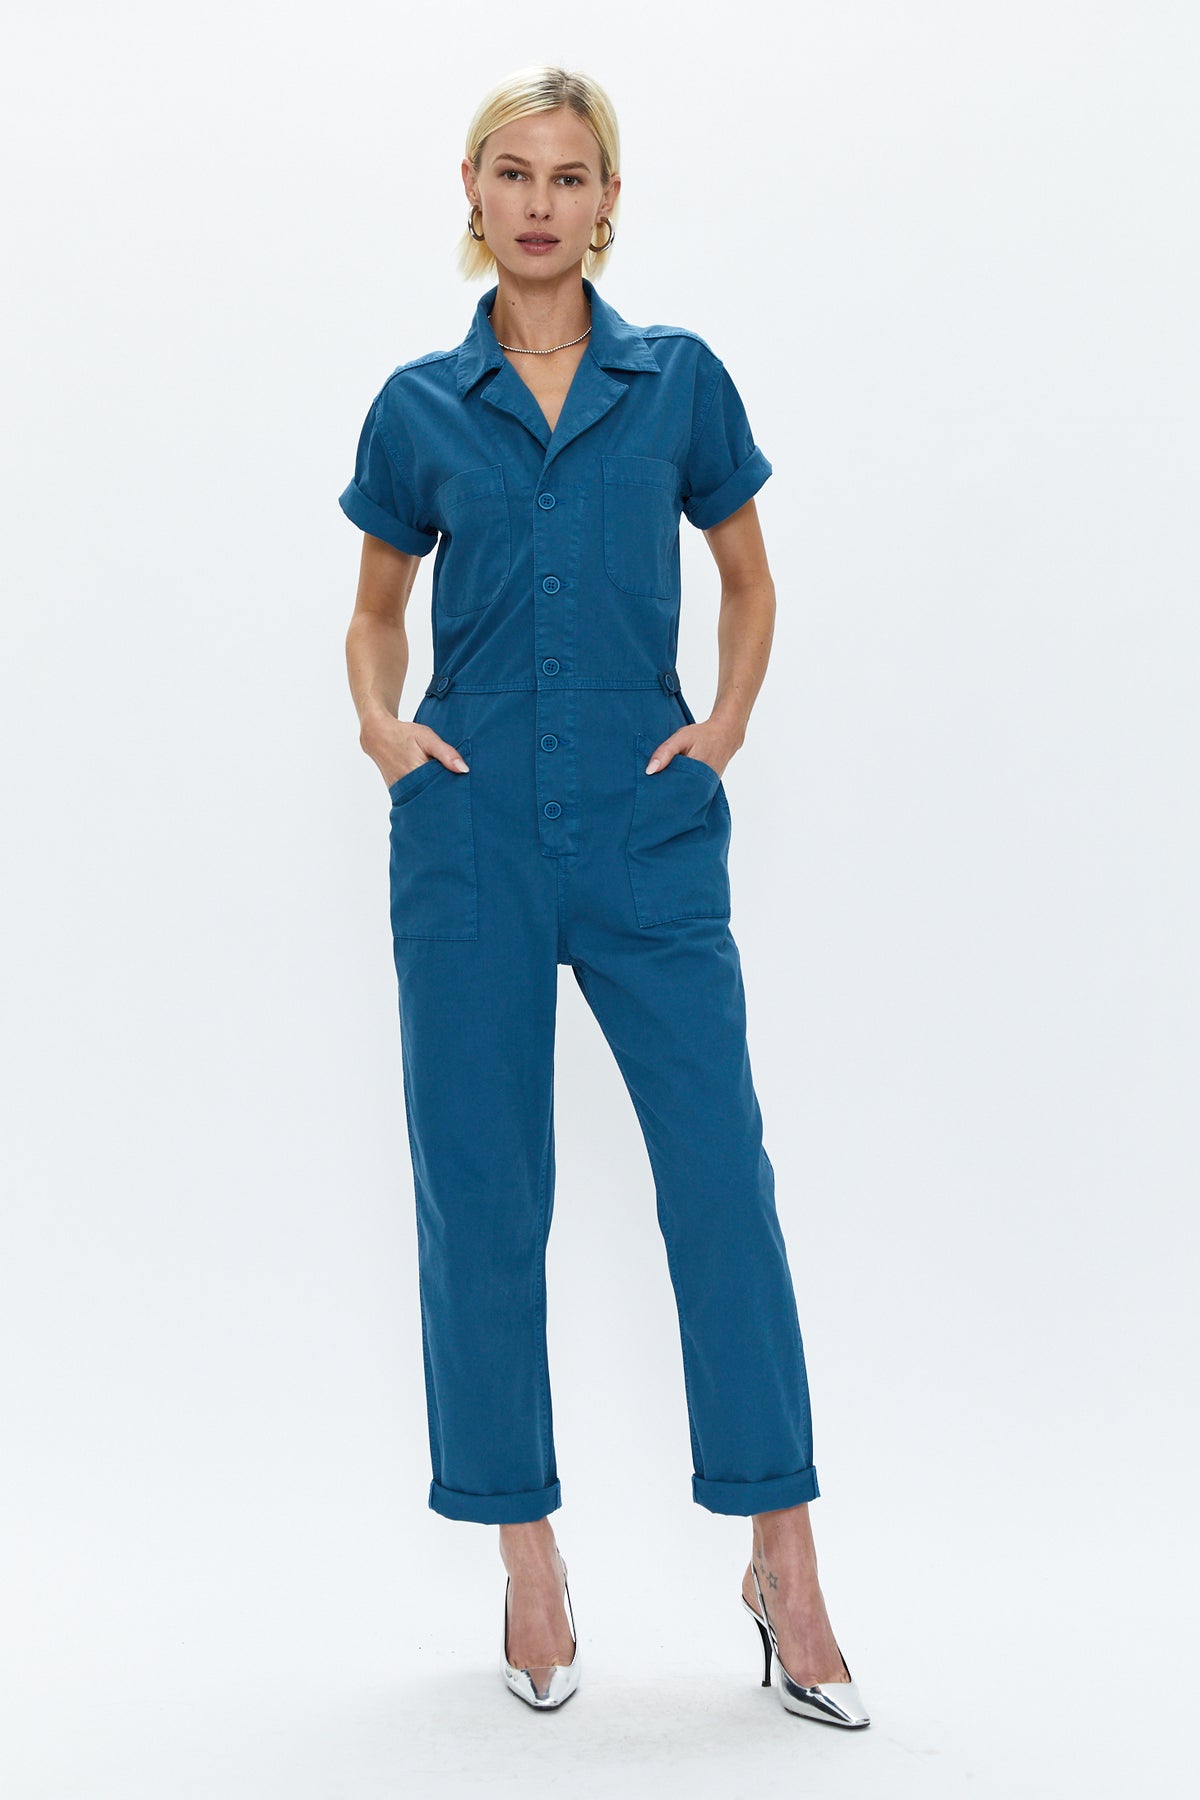 Grover Short Sleeve Field Suit - Atlas
            
              Sale